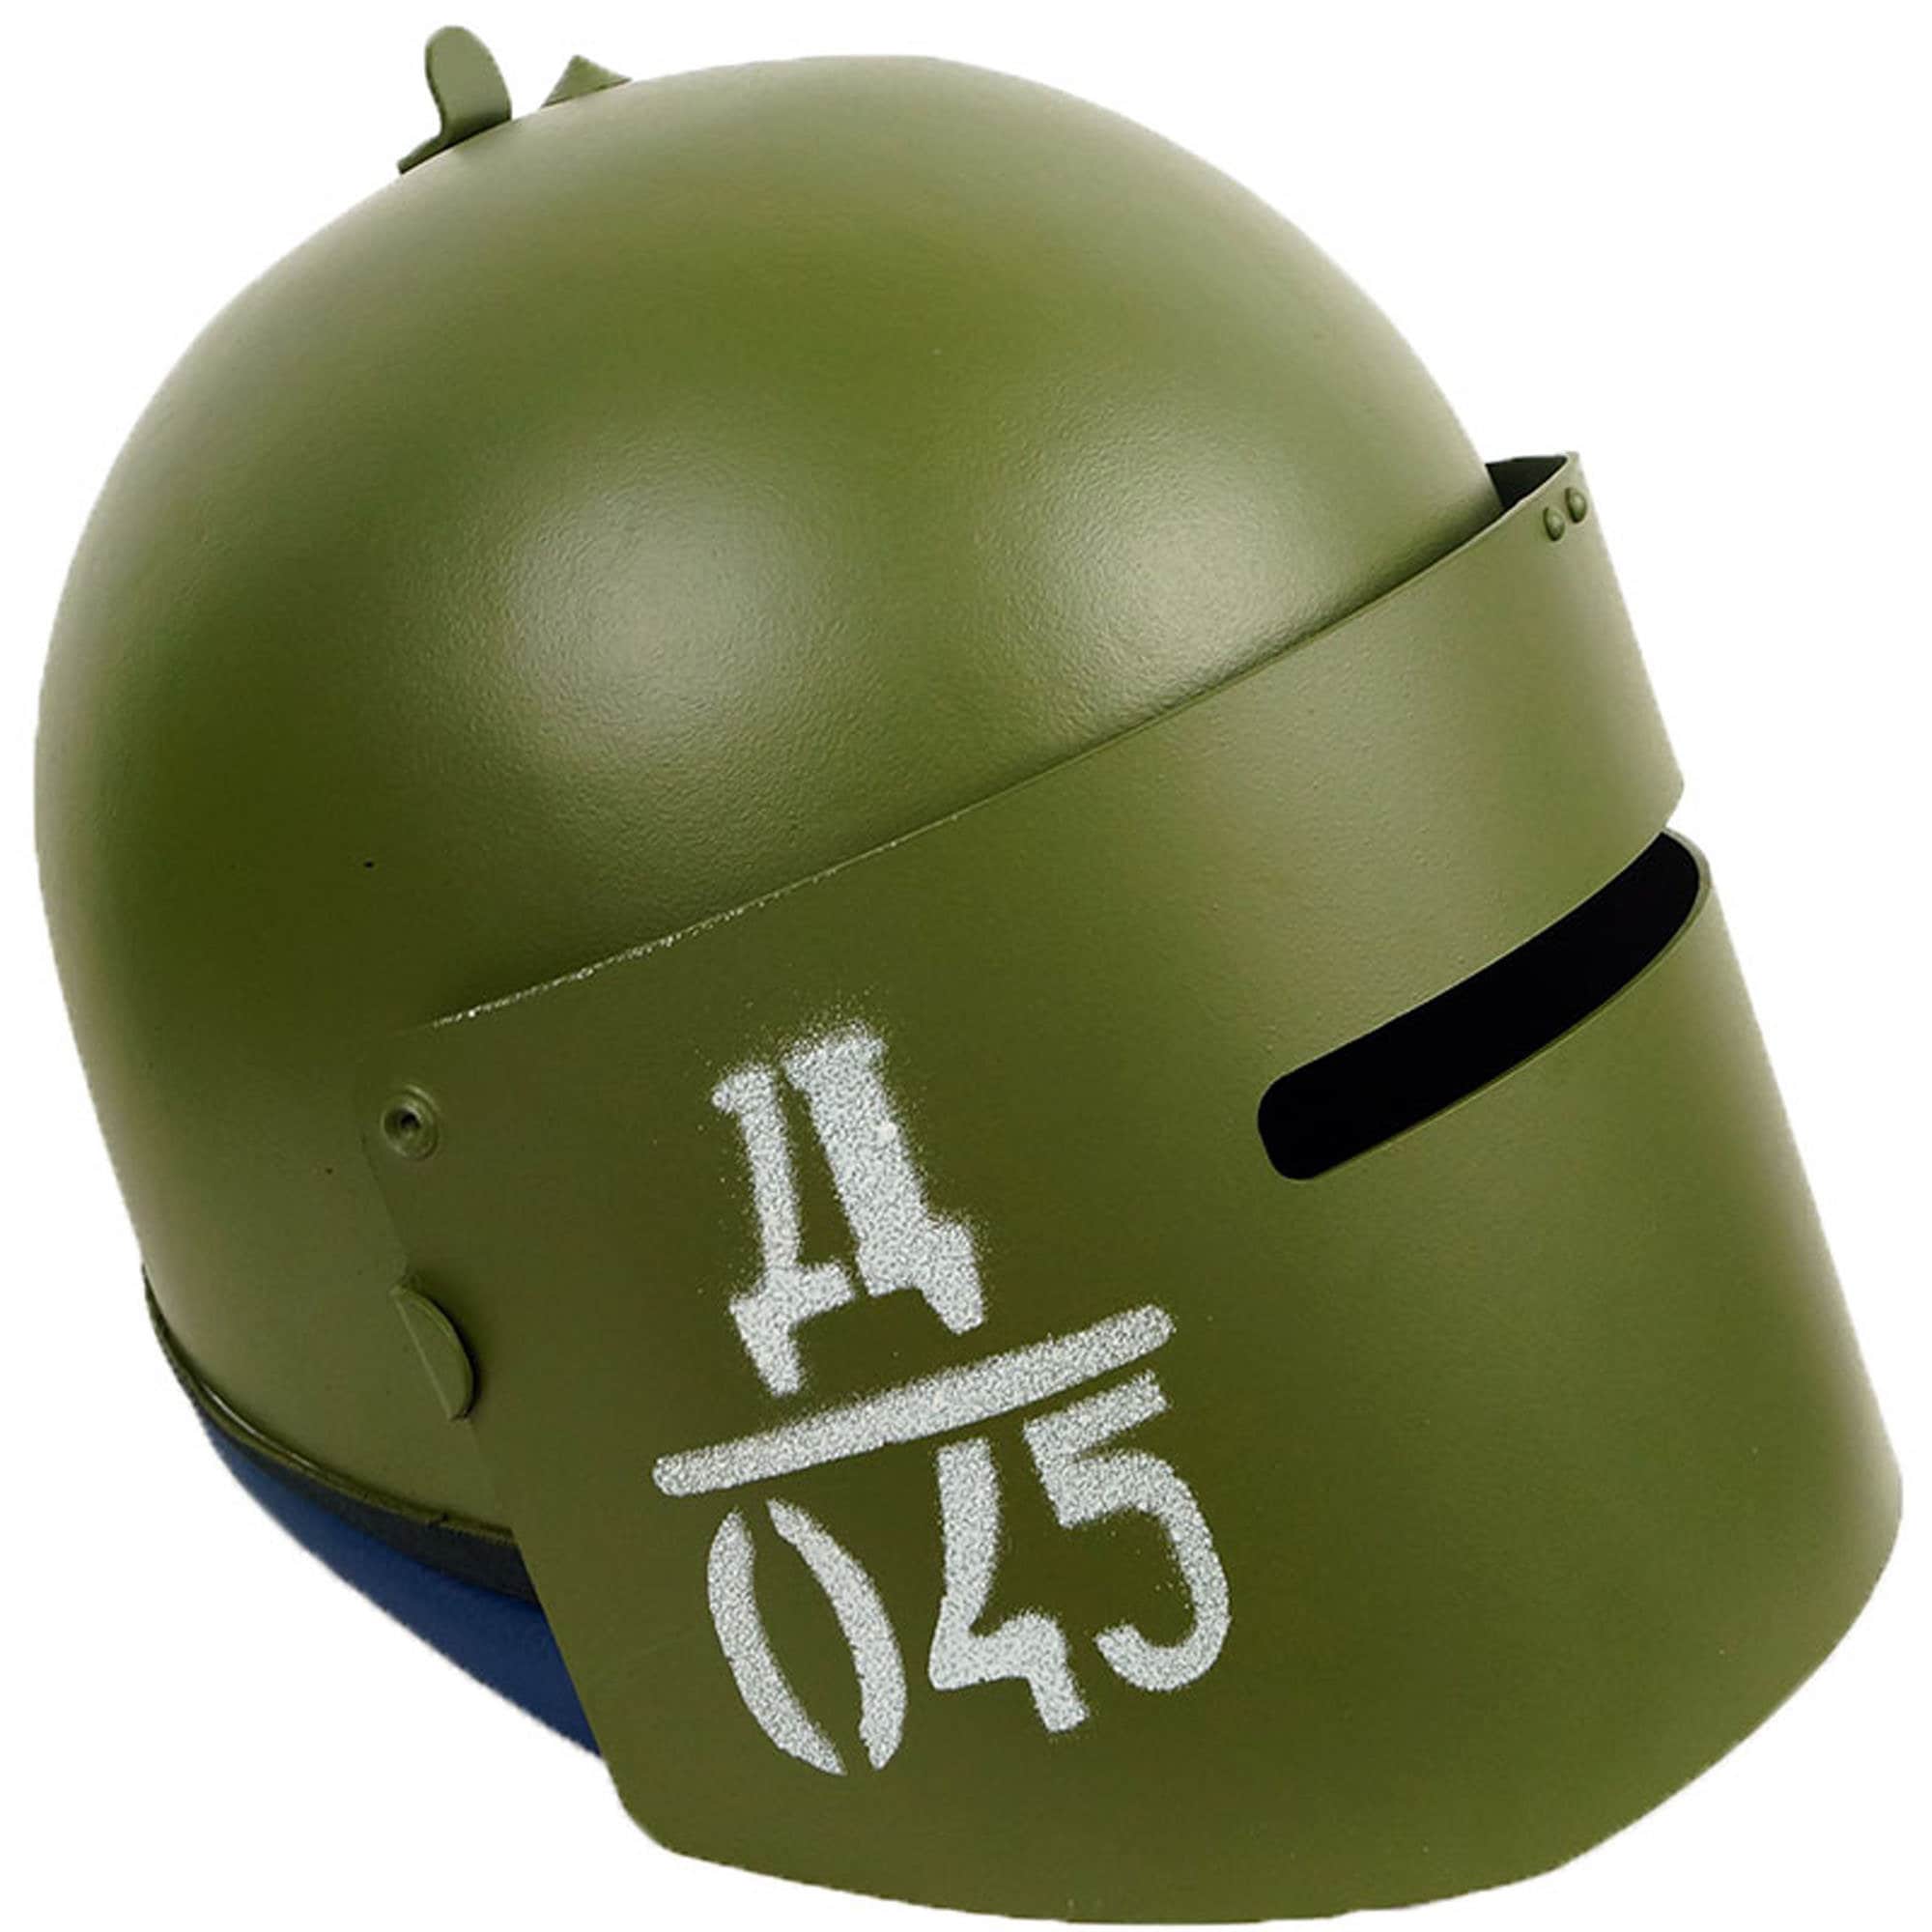 Russian military helmet REPLICA Tachanka sh-1 Airsoft | Etsy